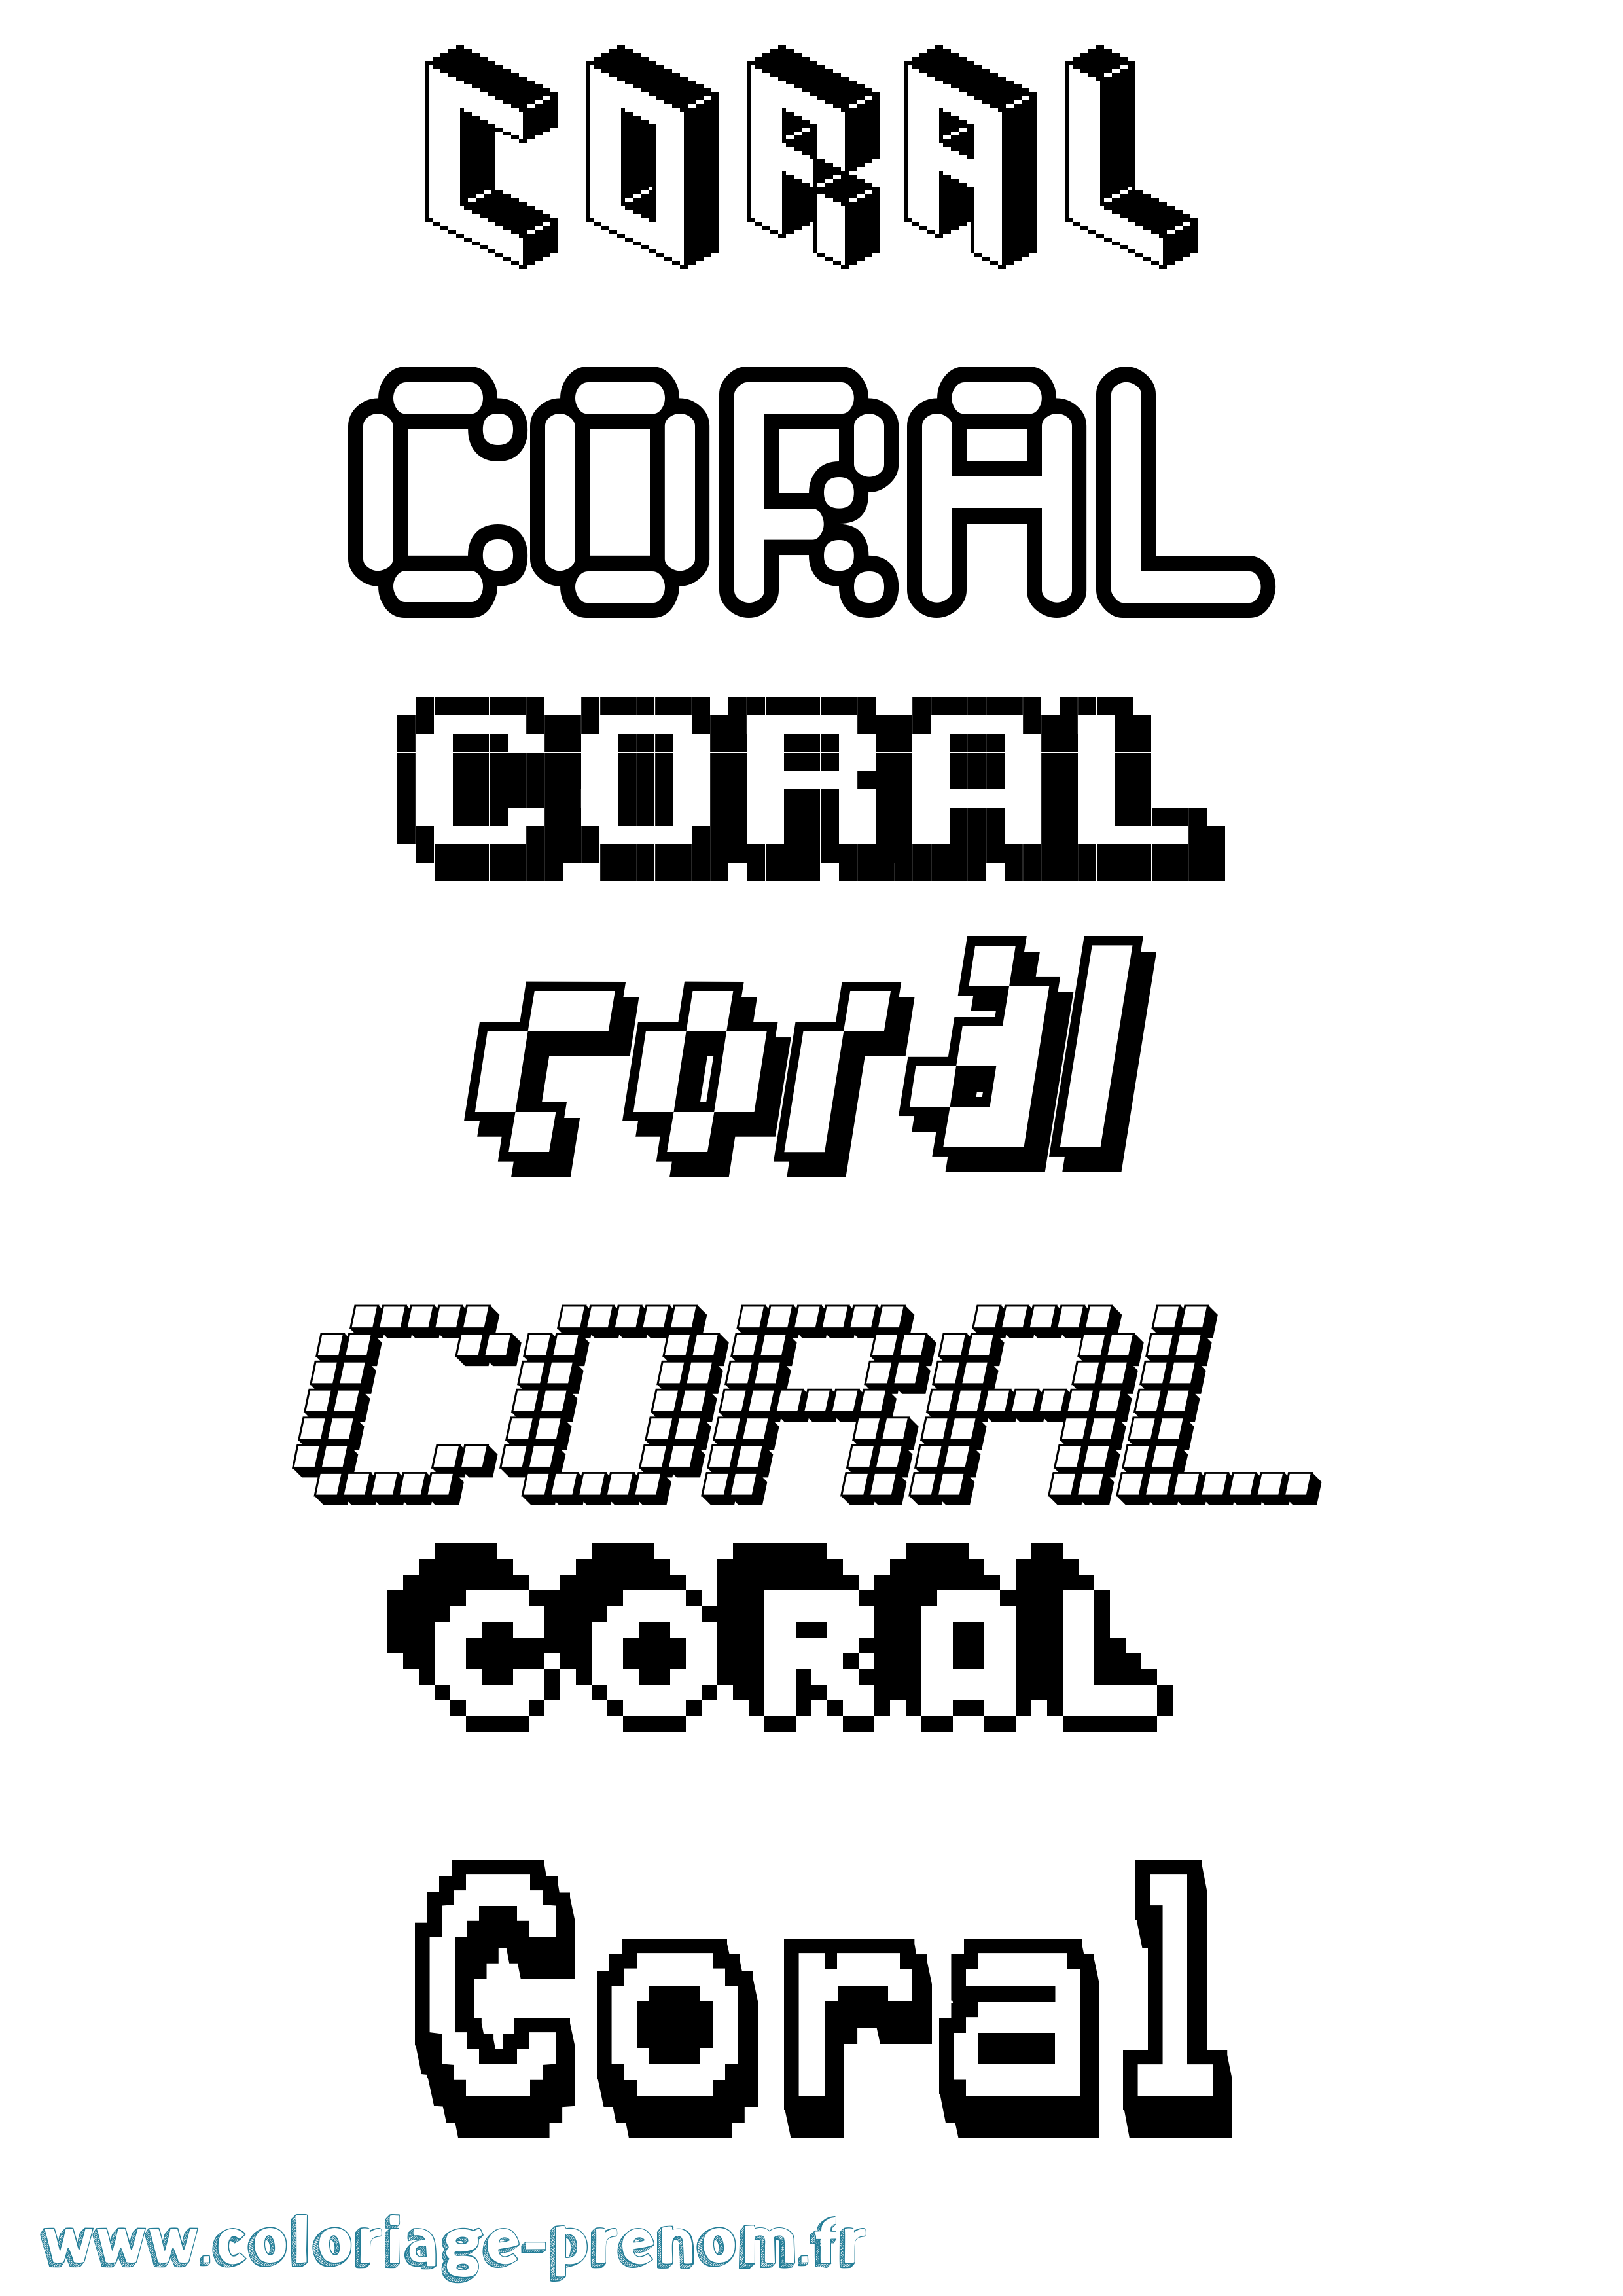 Coloriage prénom Coral Pixel